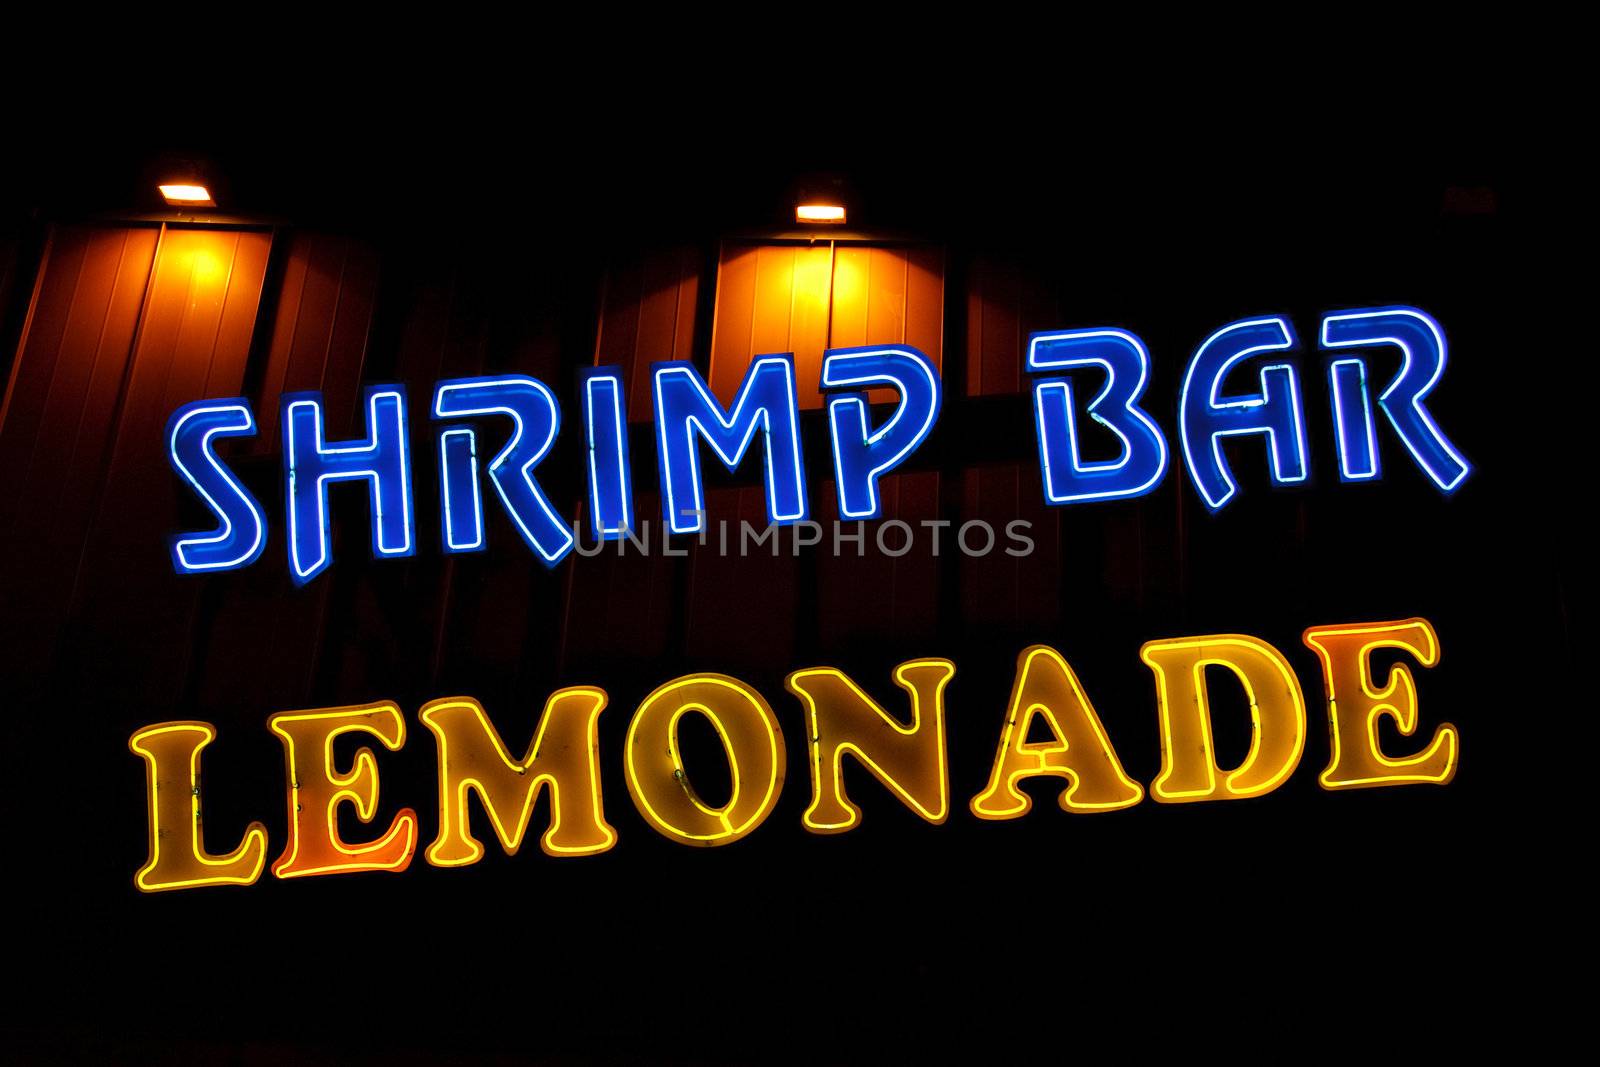 Shrimp Bar and Lemonade Neon Sign by sbonk